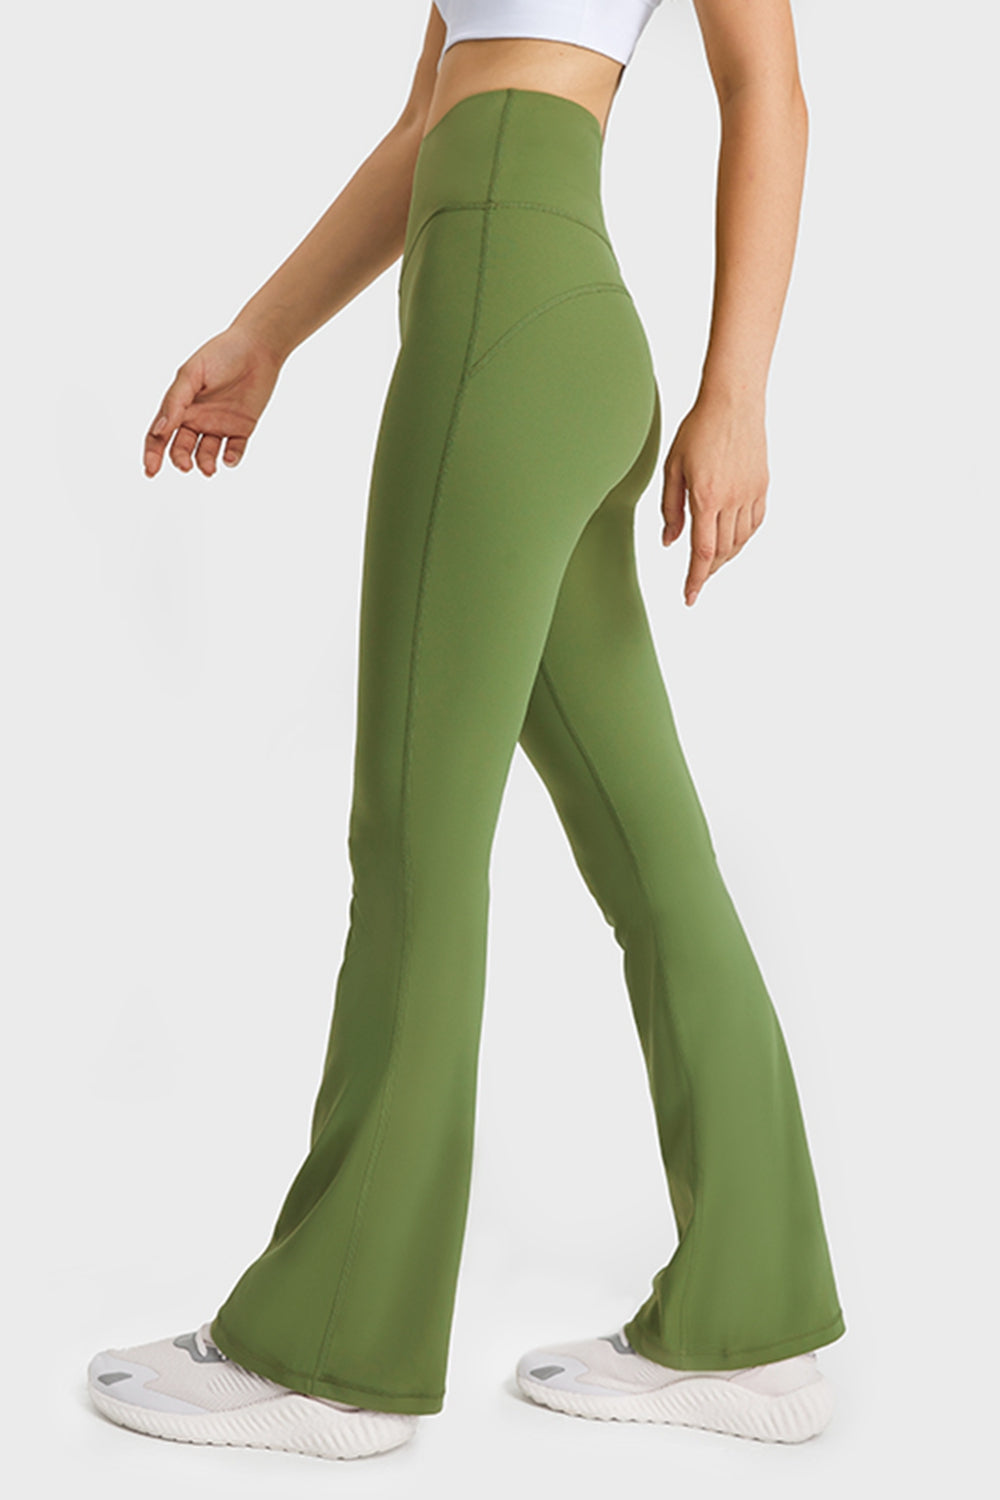 Elastic Waist Flare Yoga Pants - DromedarShop.com Online Boutique